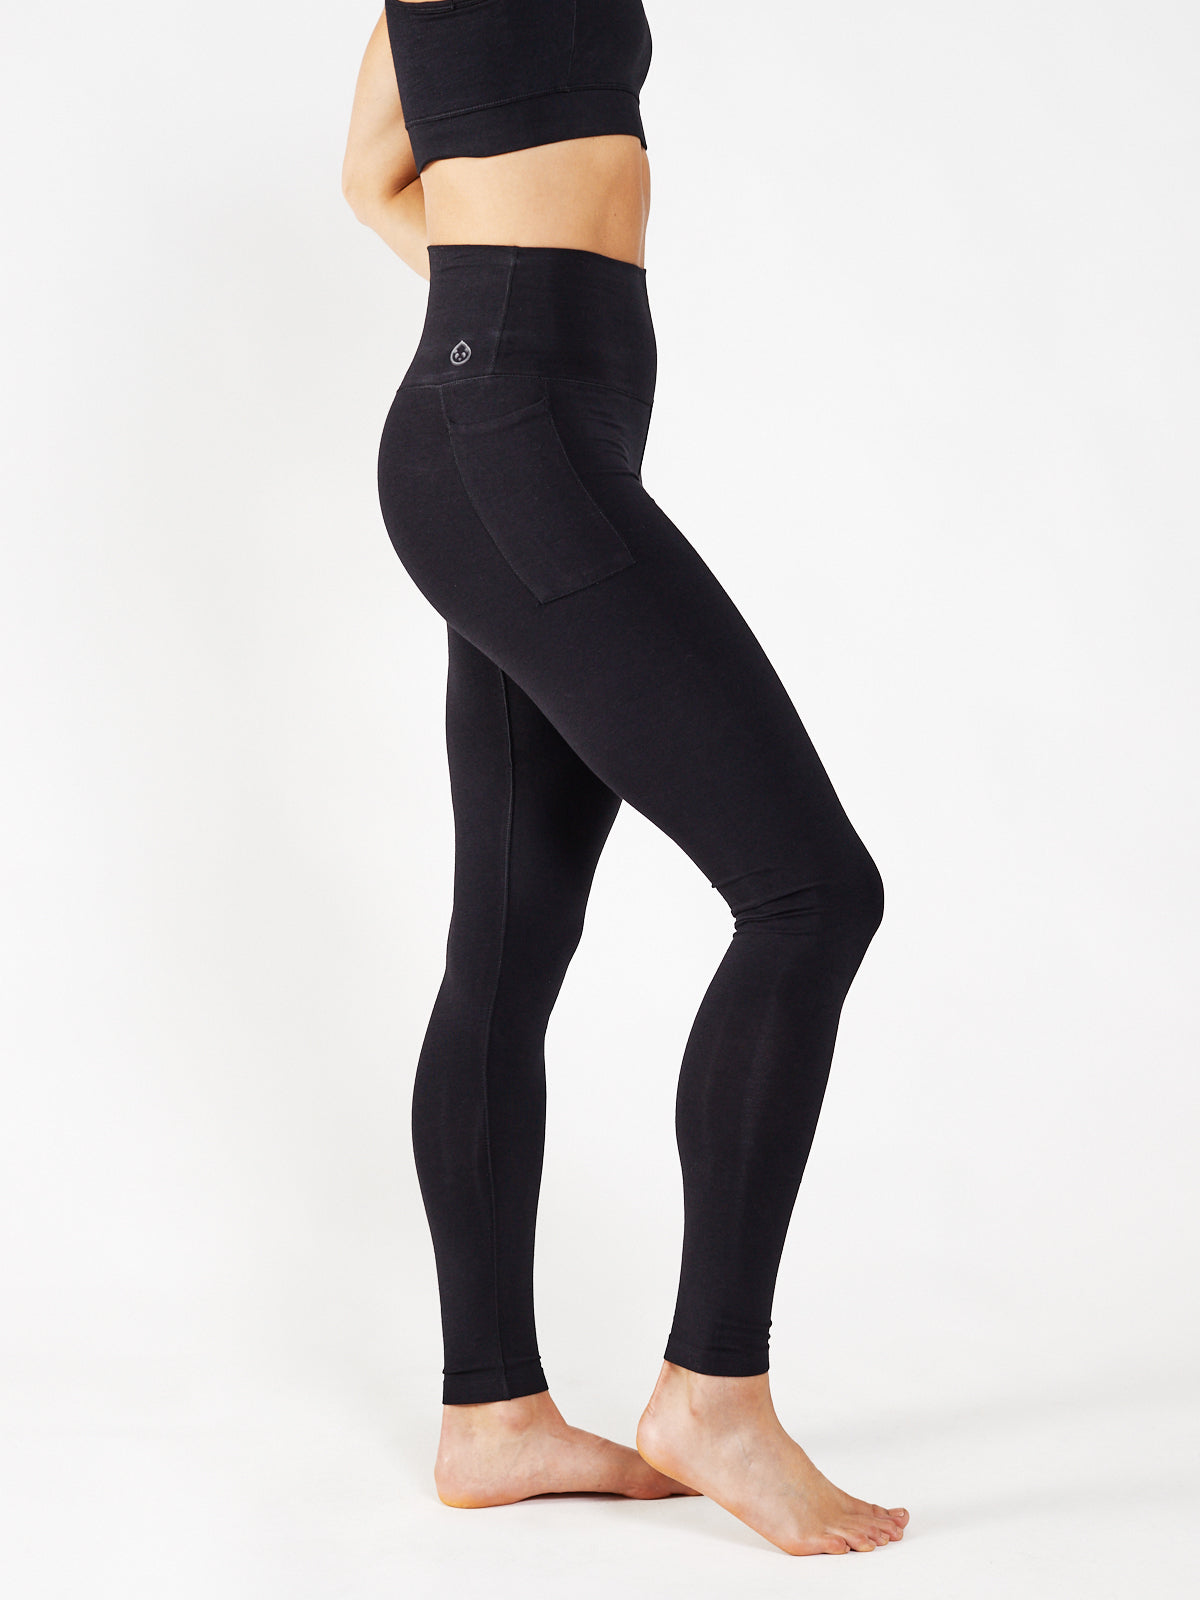 Legging for Women Yoga Pants Workout High Waist Black Leggings Pockets Workout  Yoga Pants -  Canada